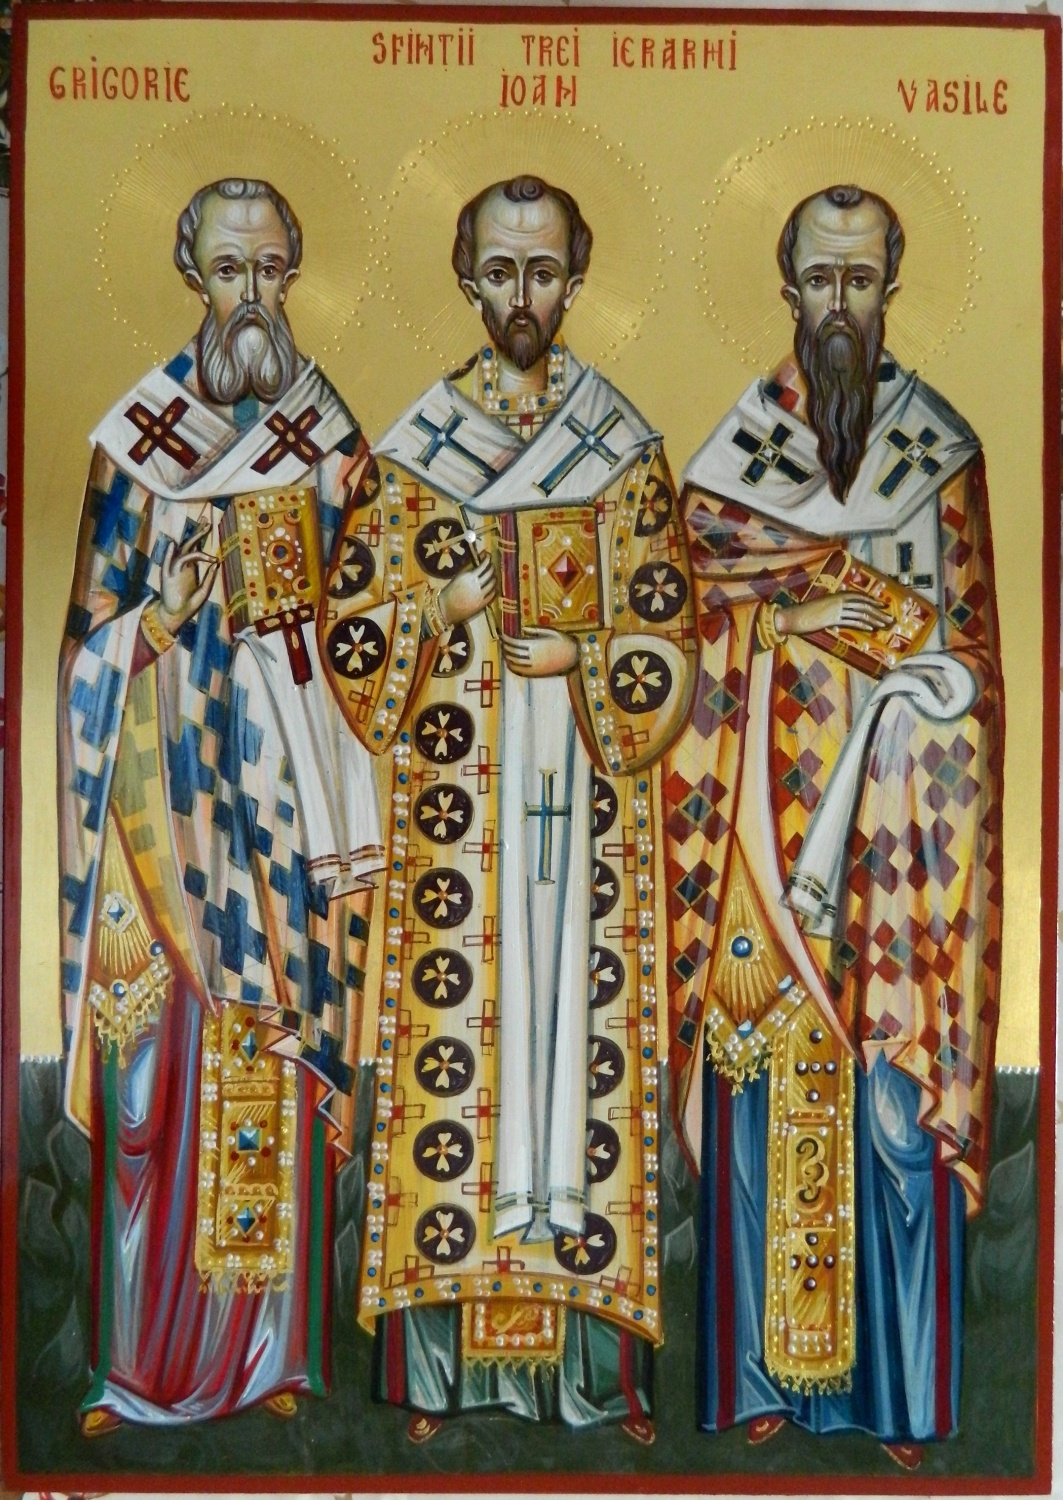 SFINTII TREI IERARHI- Vasile, Grigorie si Ioan!- cei trei mari luminatori ai ortodoxiei, sfintii care ne unesc si ne impaca!